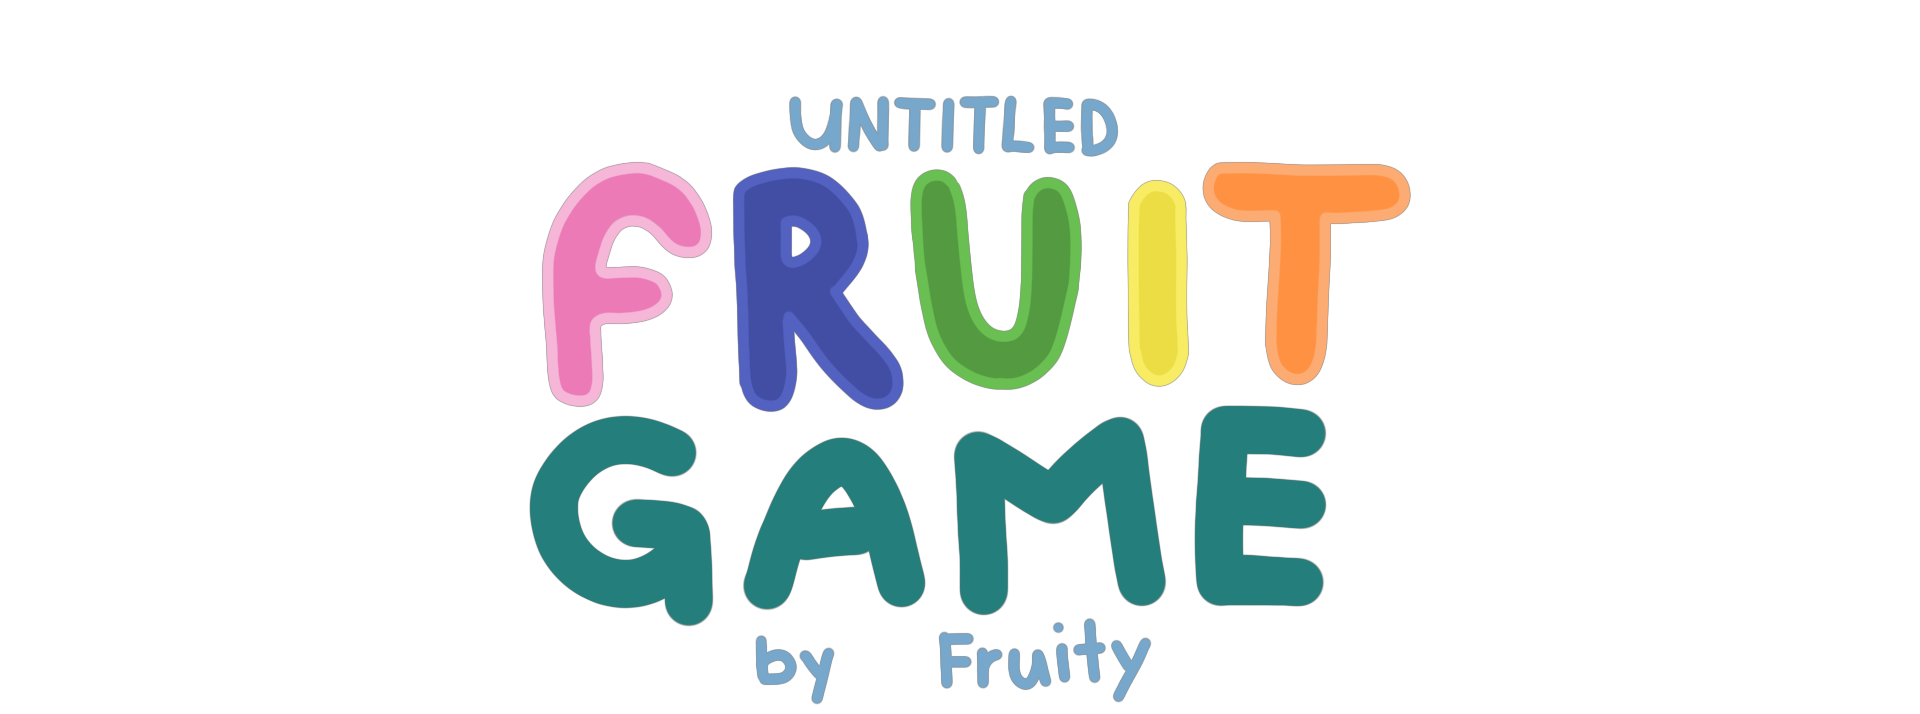 Untitled Fruit Game by RafiLepage, Aeroska, grimmsun, Victoria Debelli ...